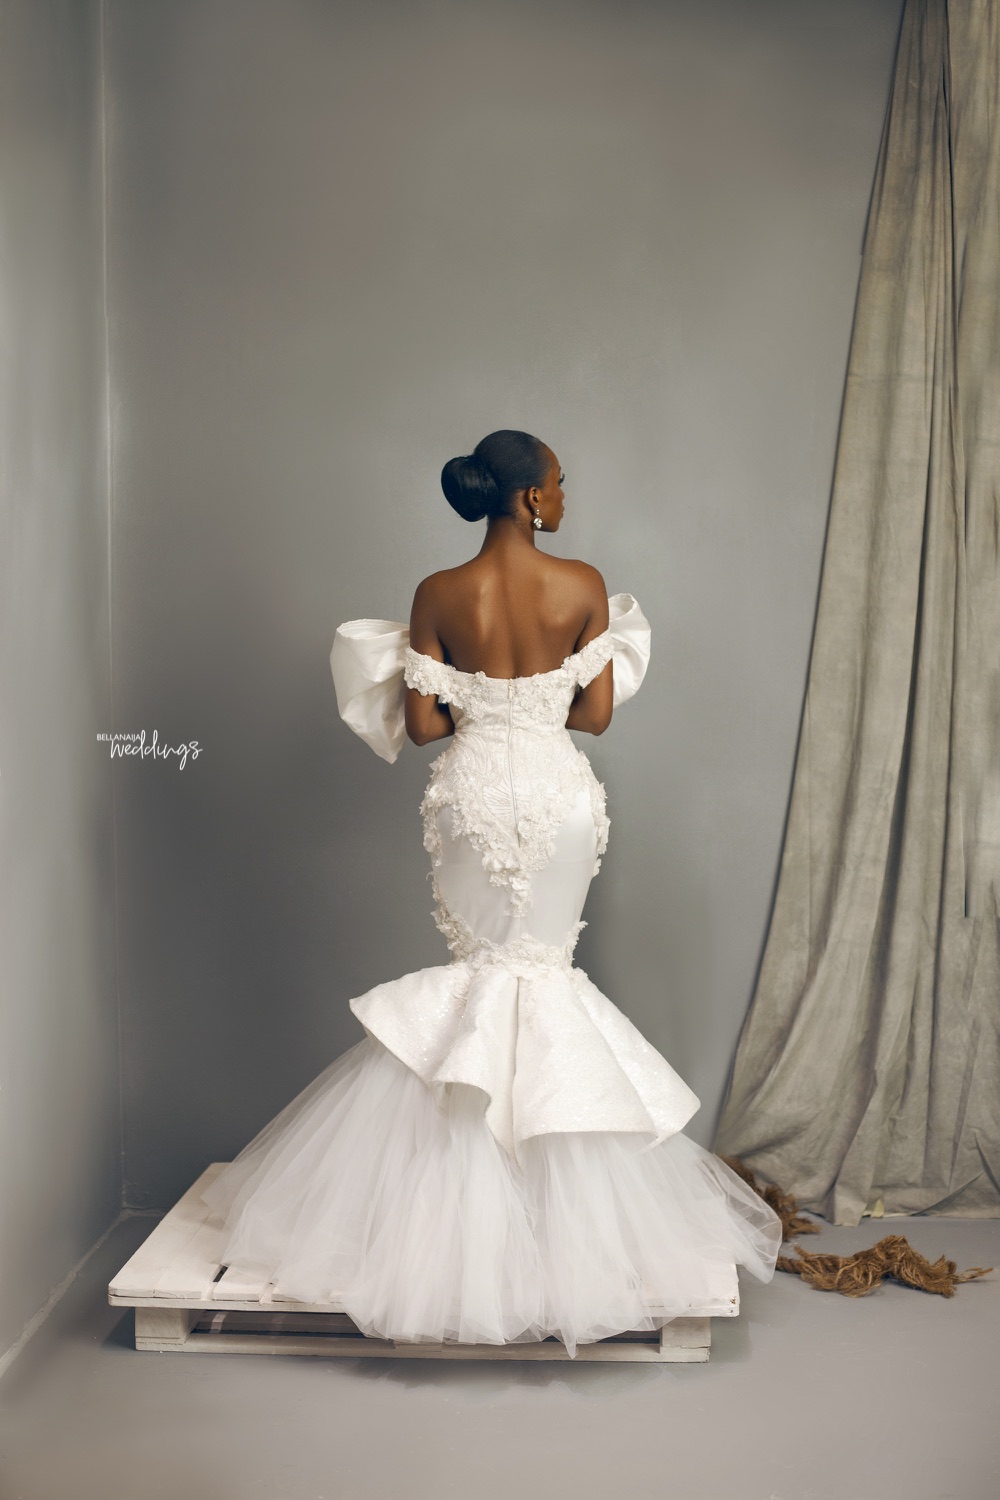 BellaNaija Weddings (bellanaijawed) - Profile | Pinterest